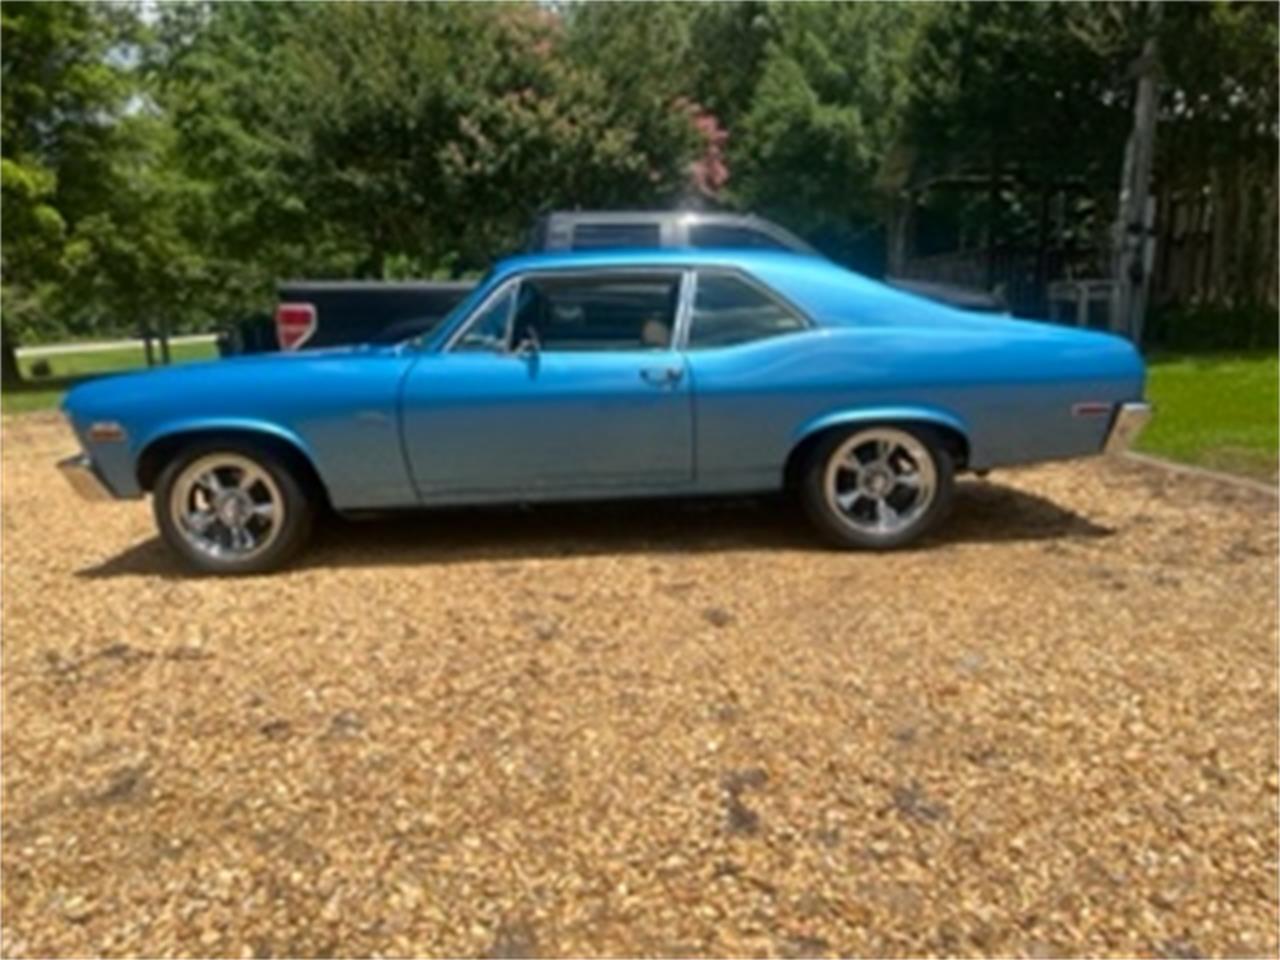 For Sale: 1972 Chevrolet Nova in Tremont, Mississippi for sale in Tremont, MS